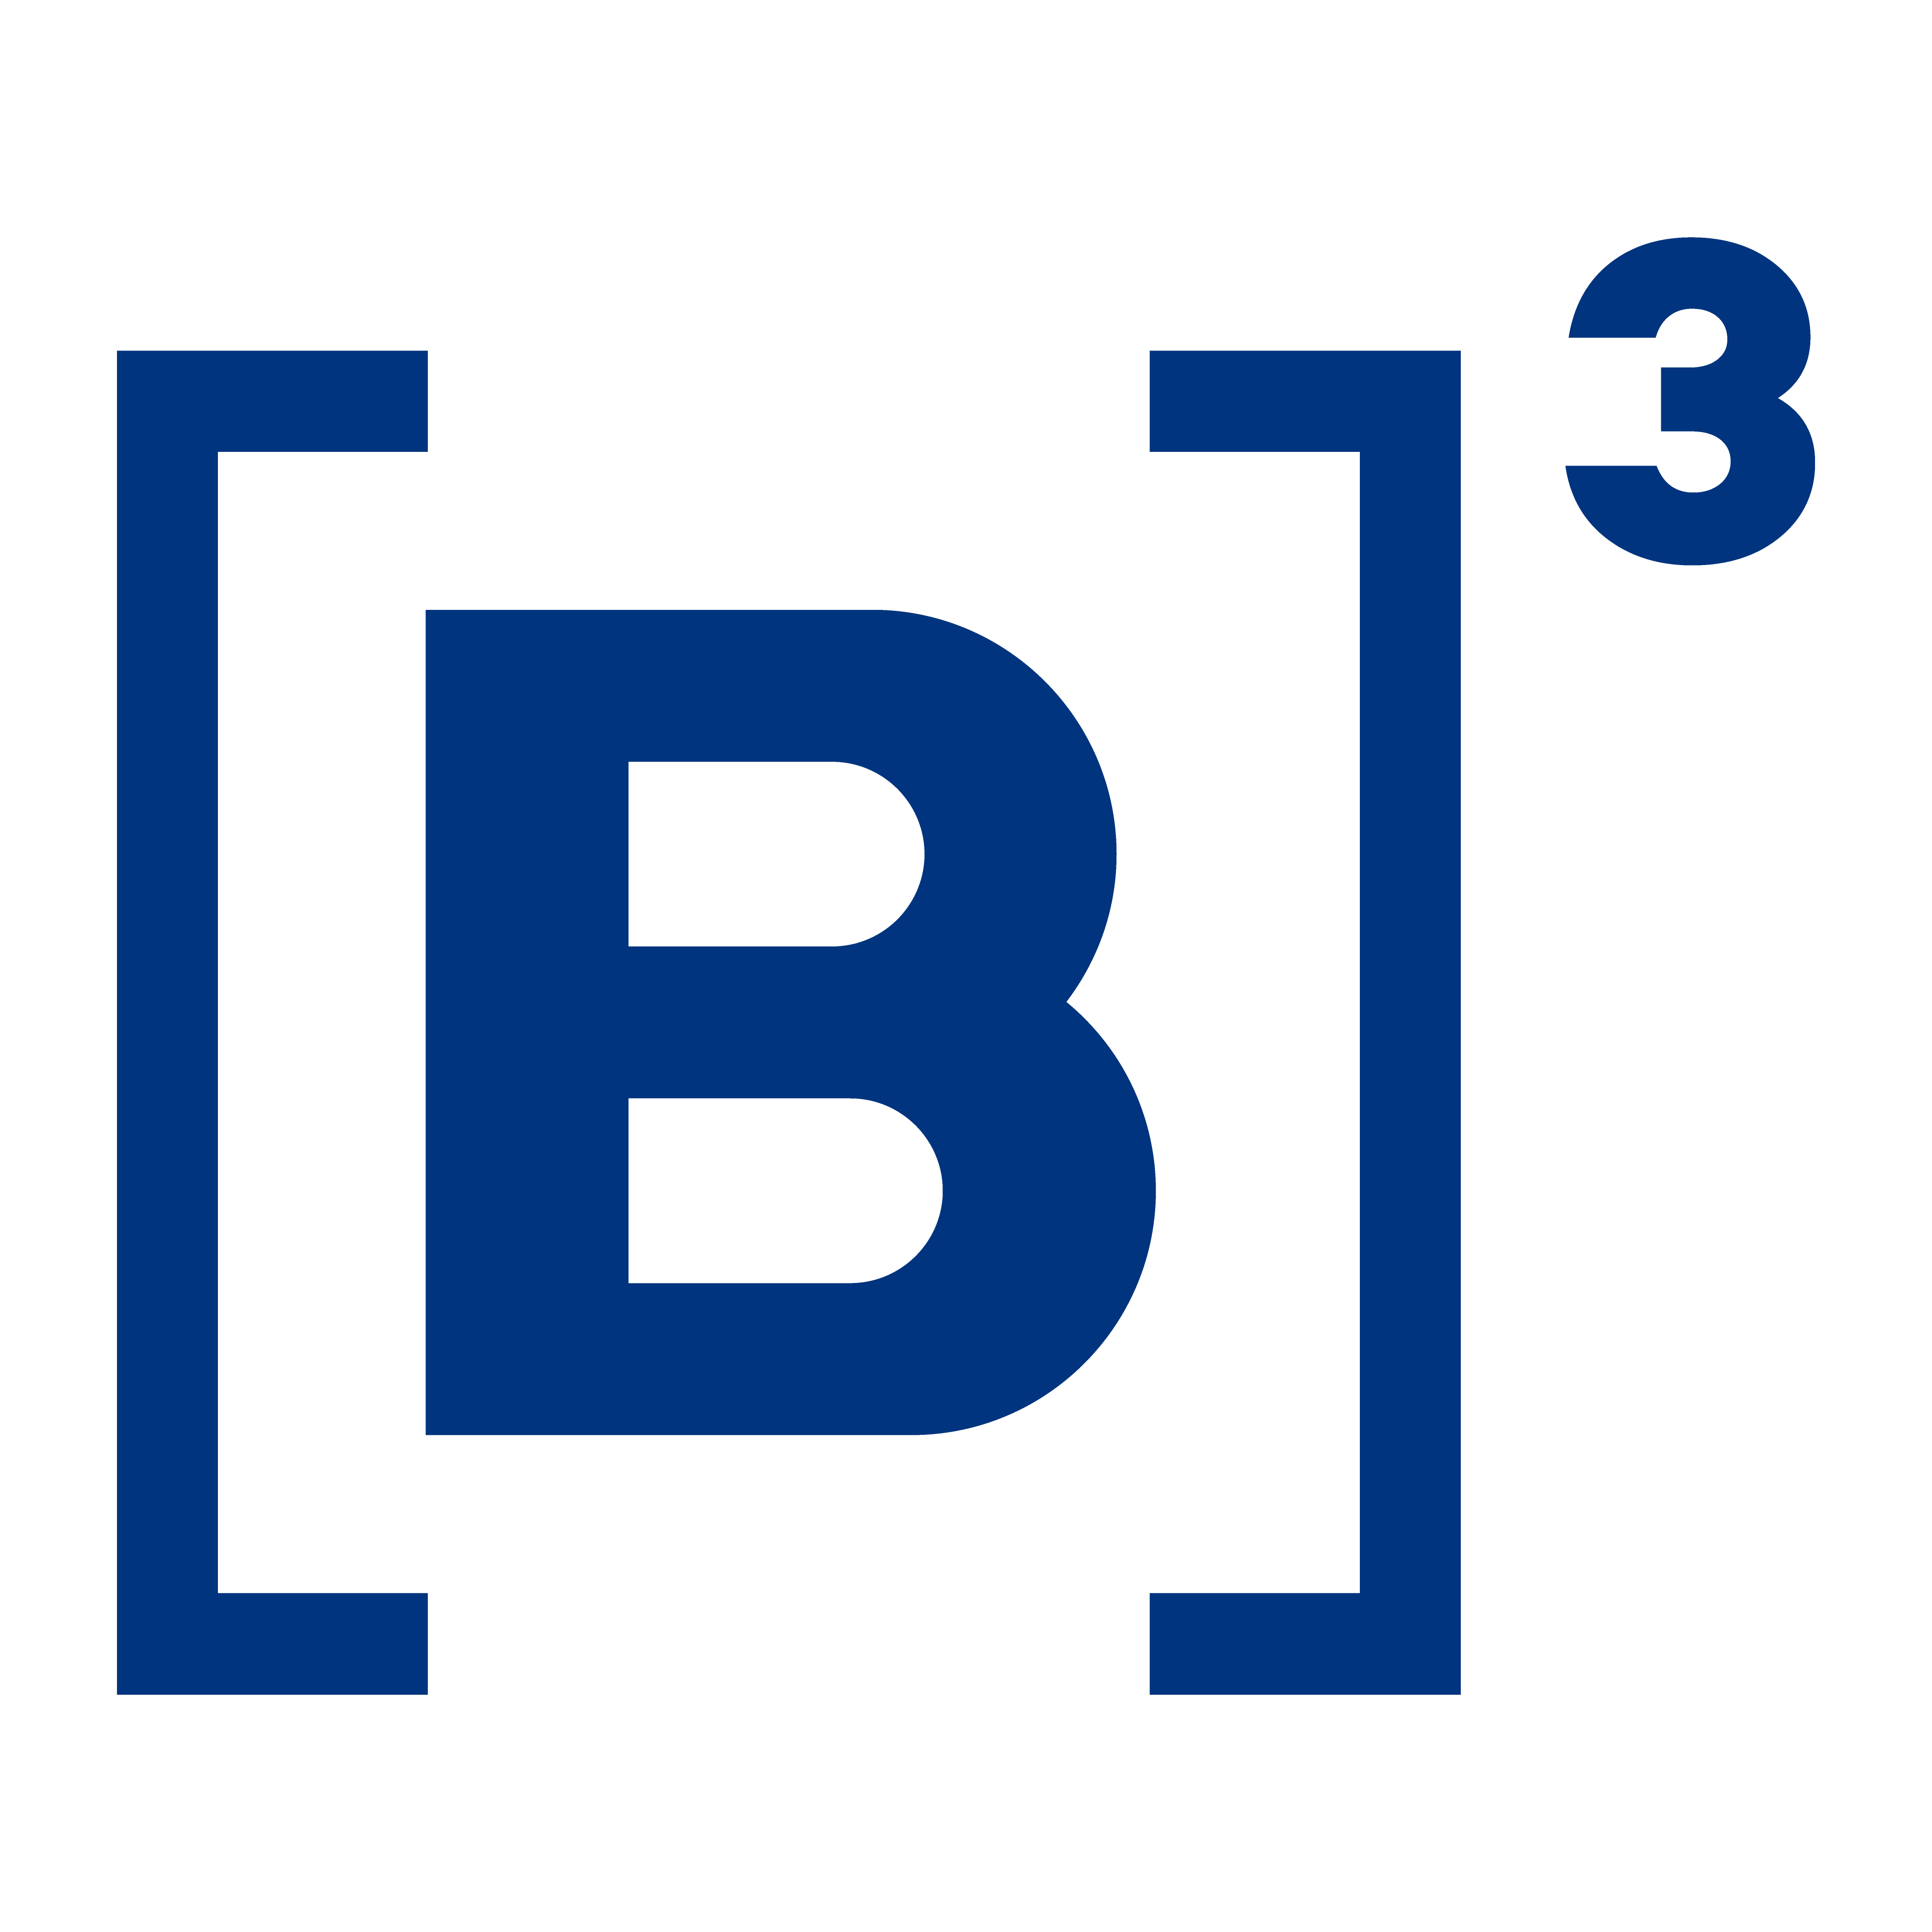 Logo B3 Brasil Bolsa Balção – Logos PNG